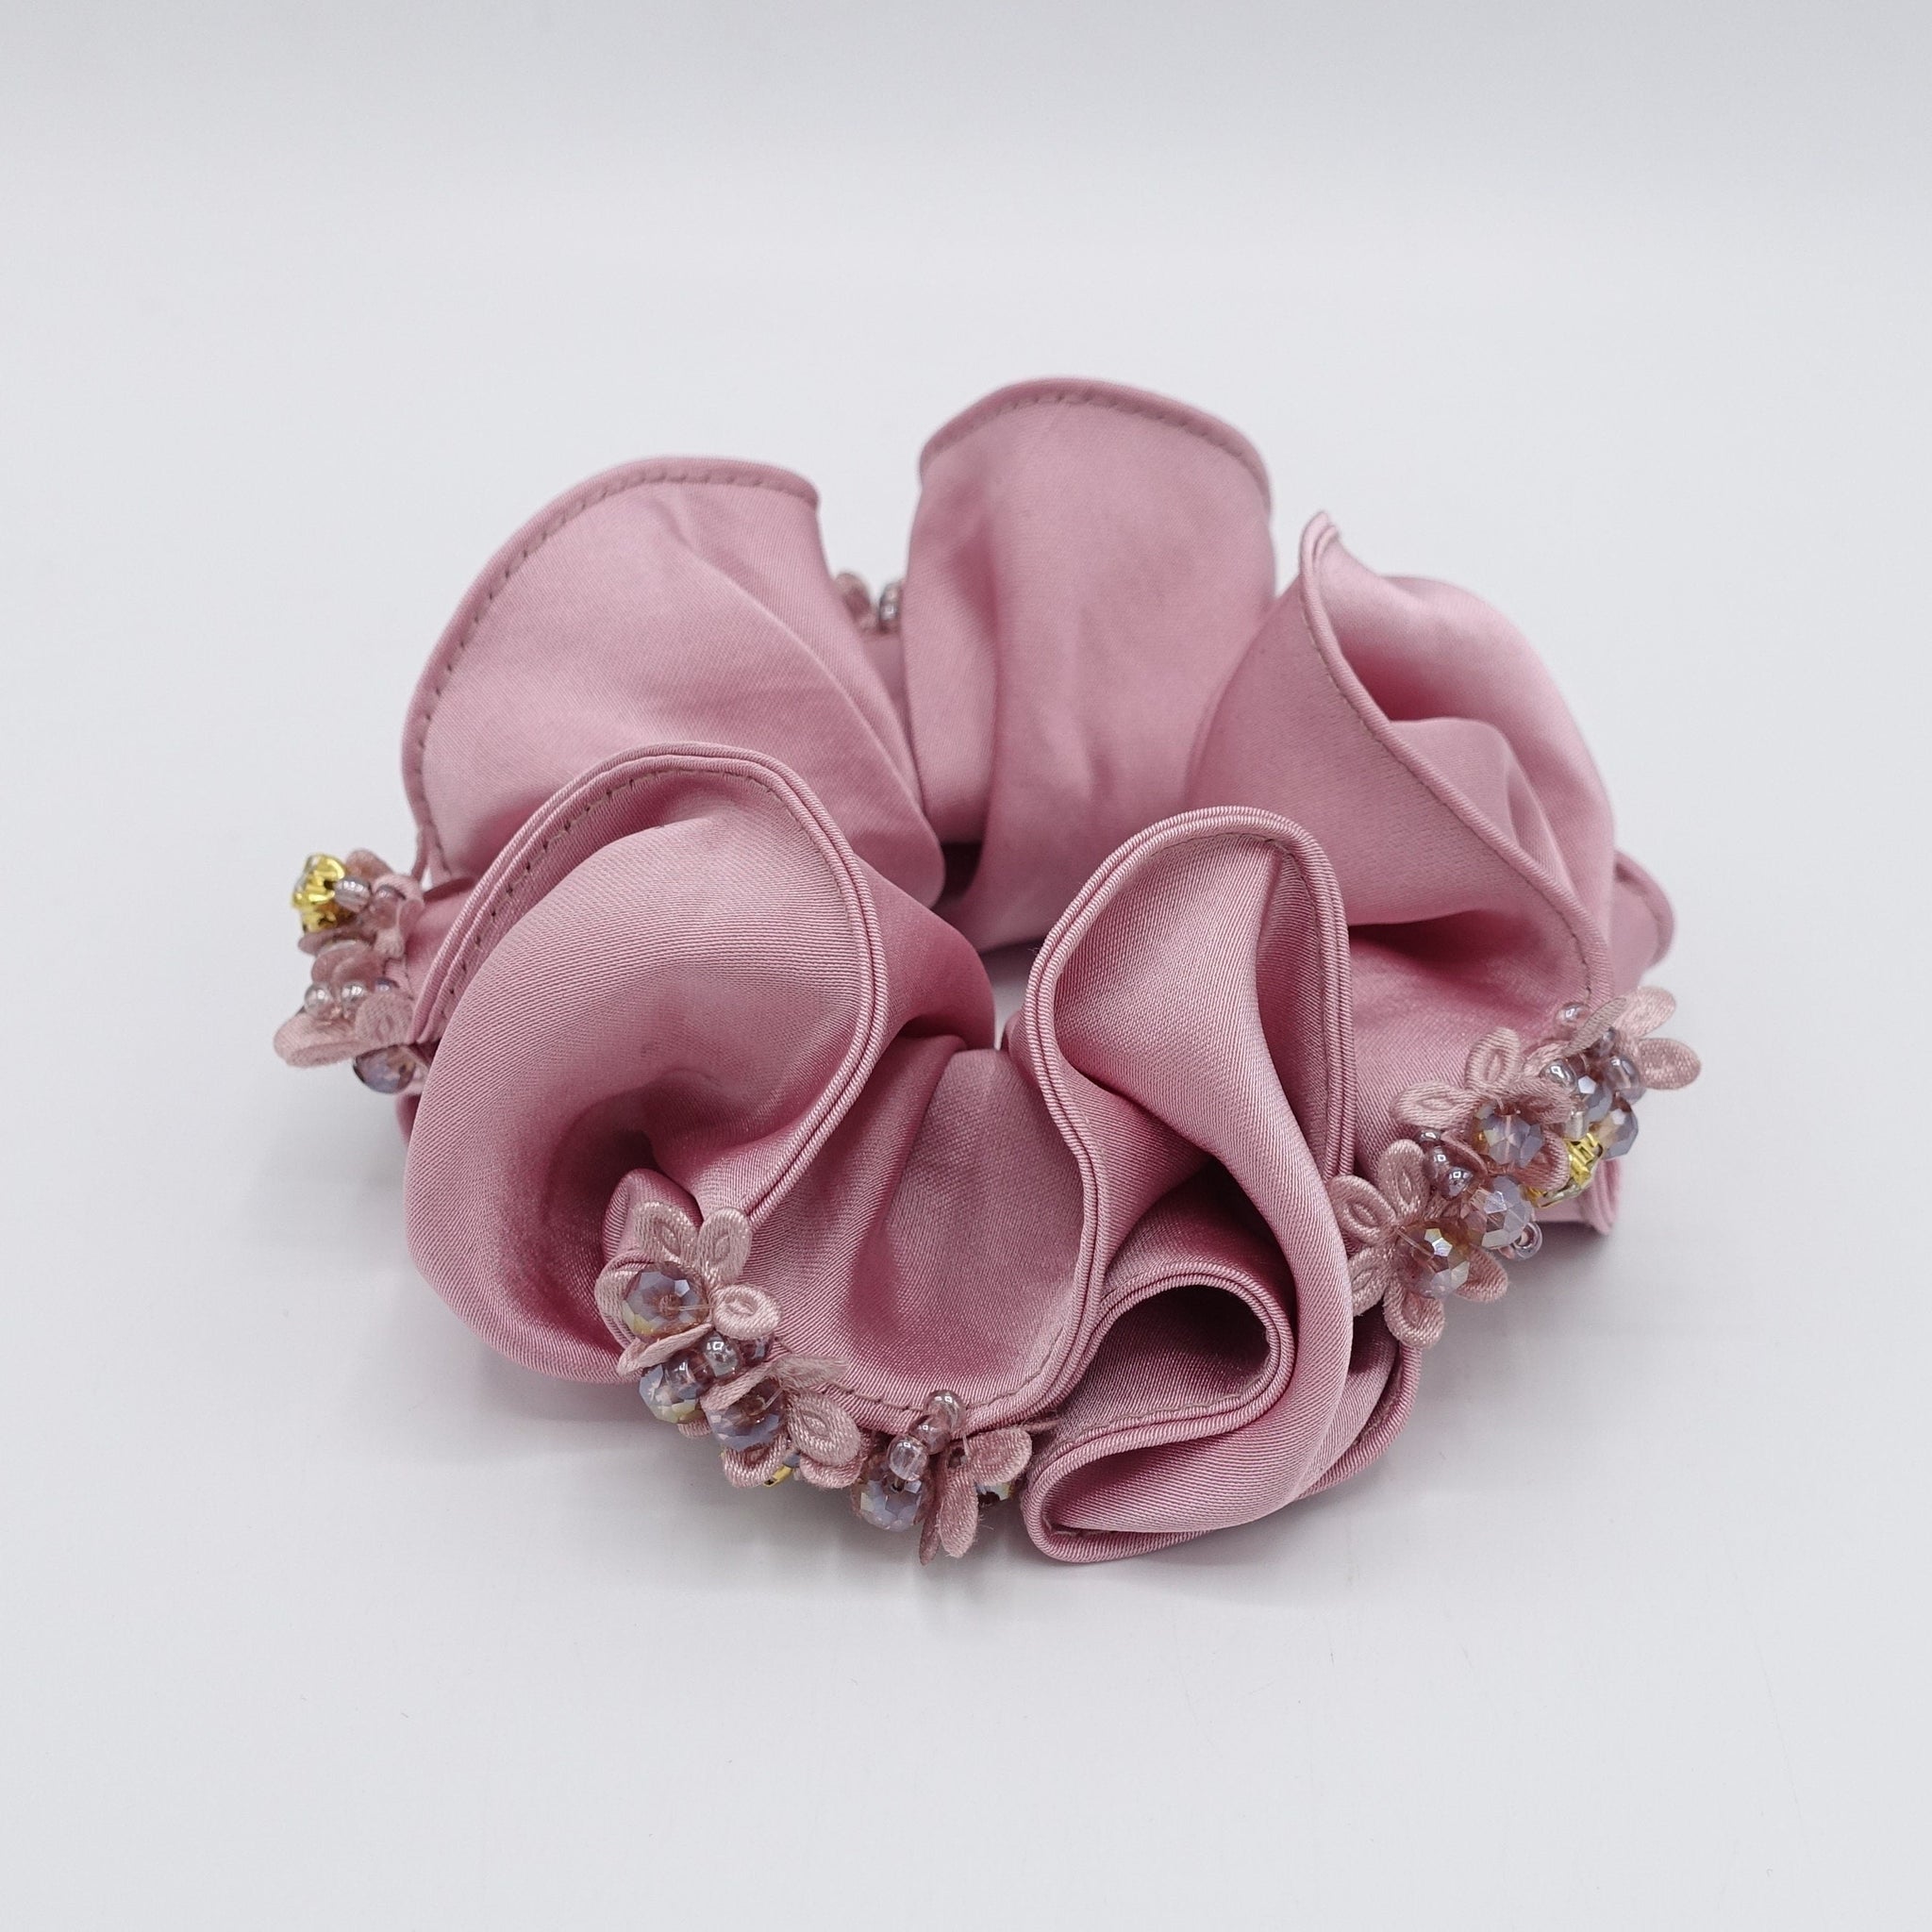 VeryShine Scrunchies Pink satin scrunchies rhinestone beads embellished scrunchie